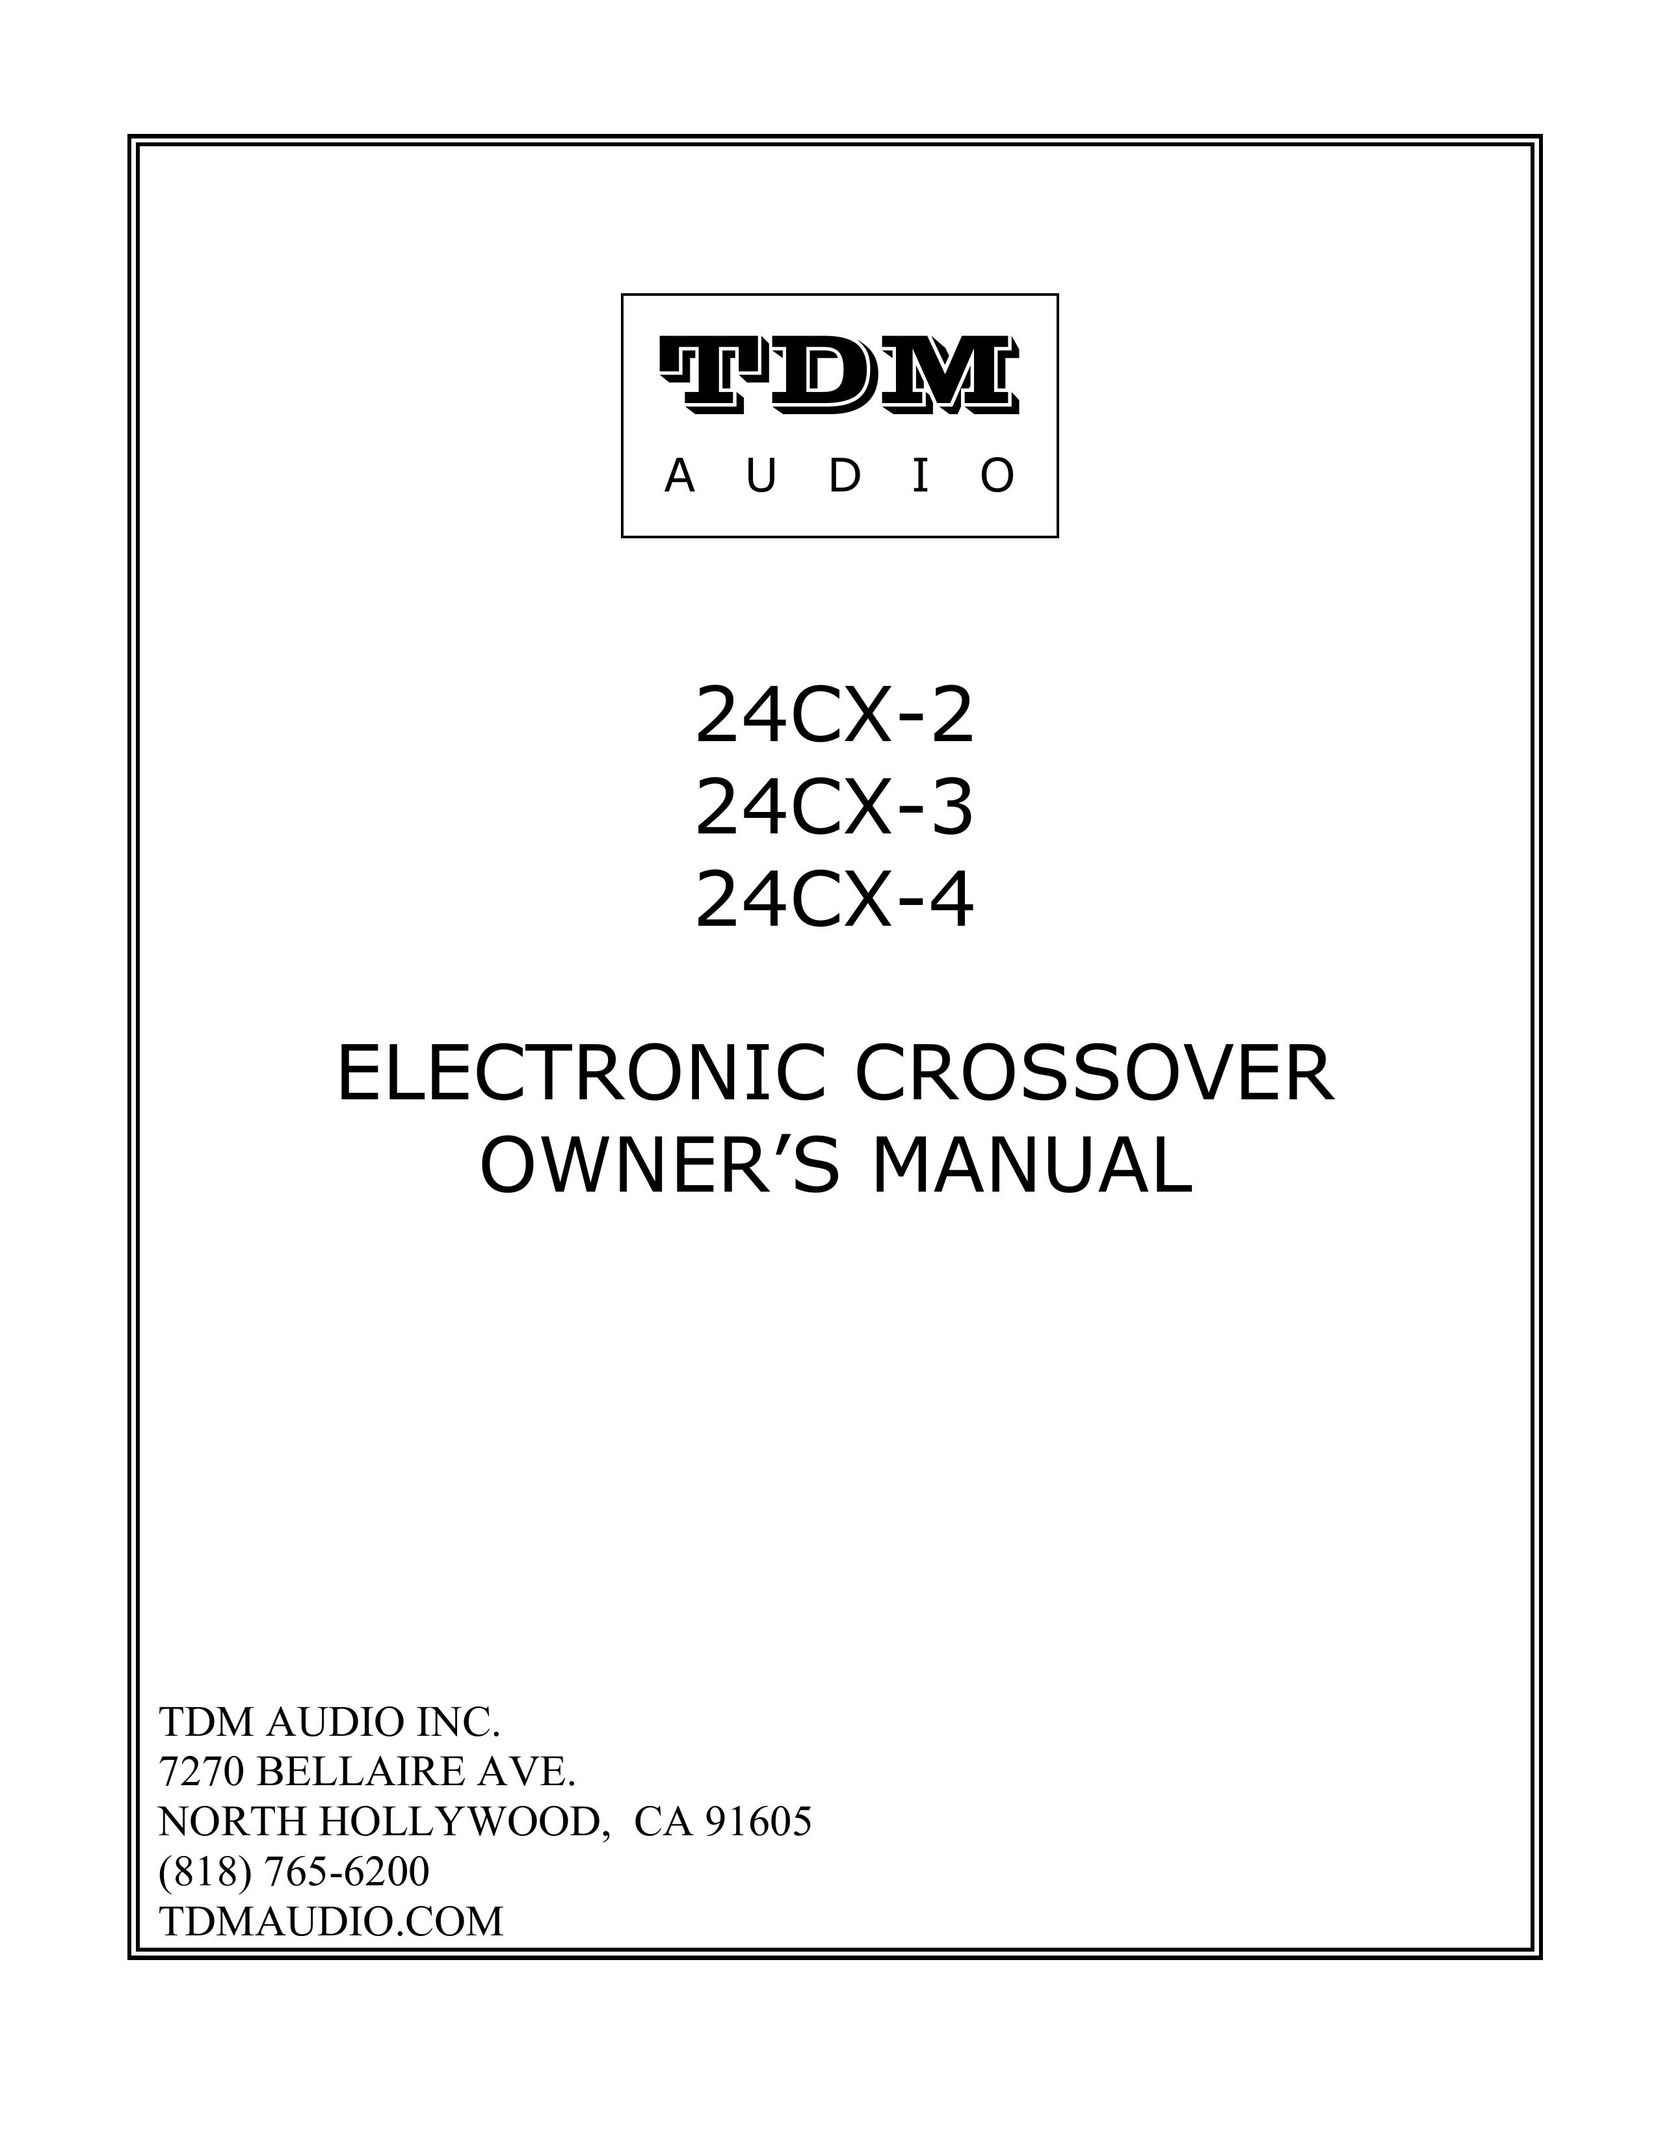 Hollywood 24CX-4 Portable Speaker User Manual